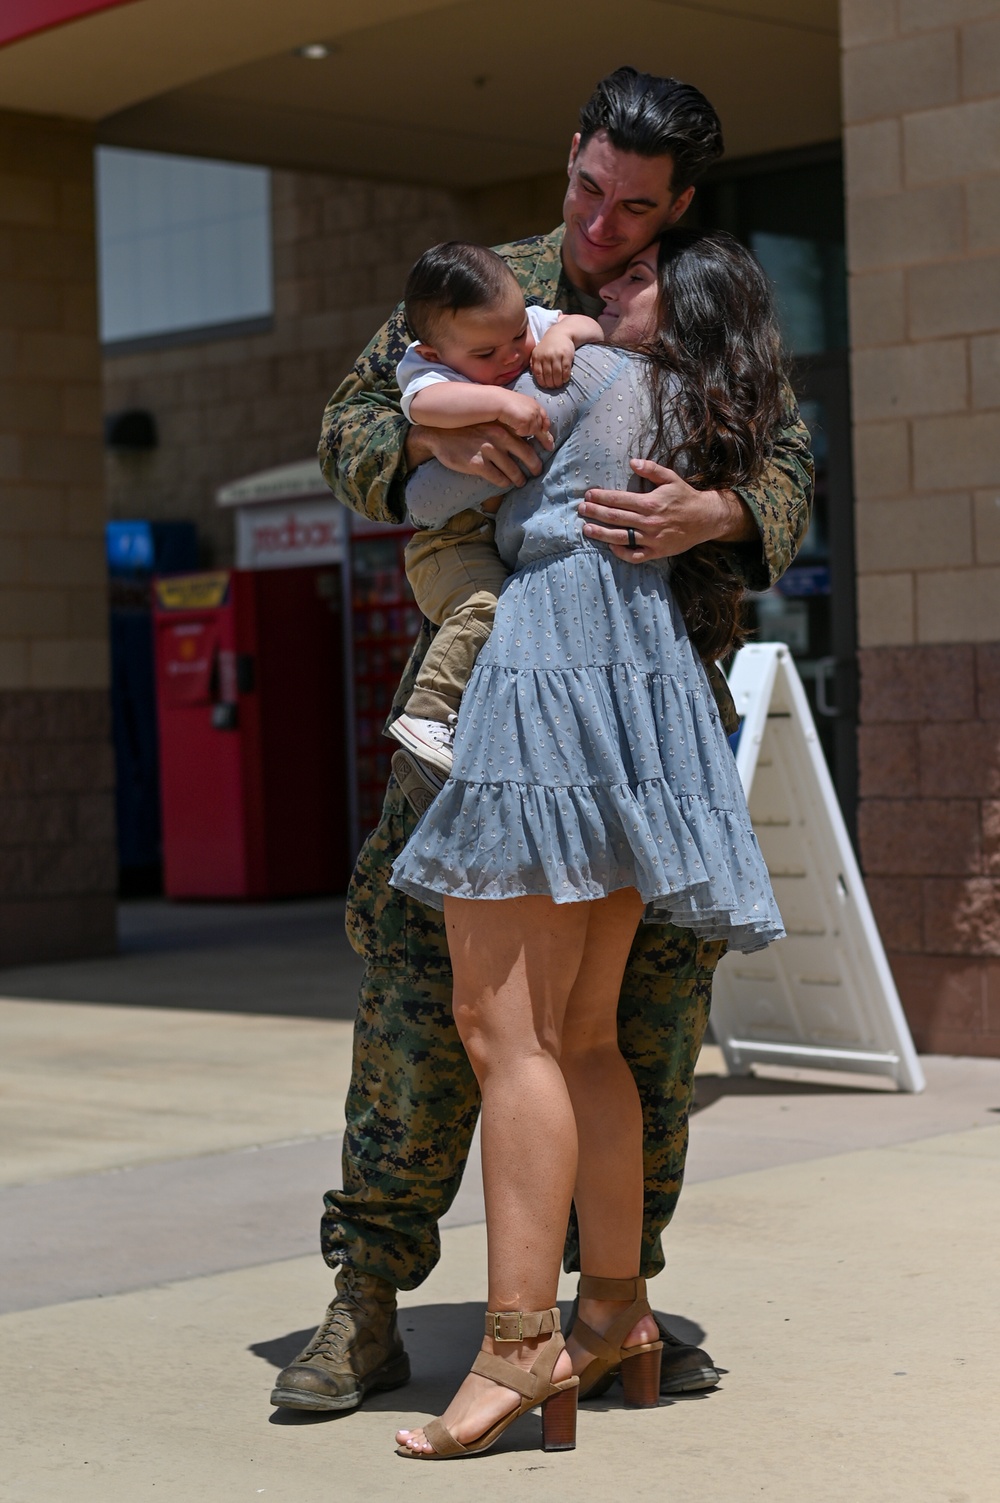 15th MEU All-Domain Reconnaissance Detachment Marines, Sailors return from seven-month deployment